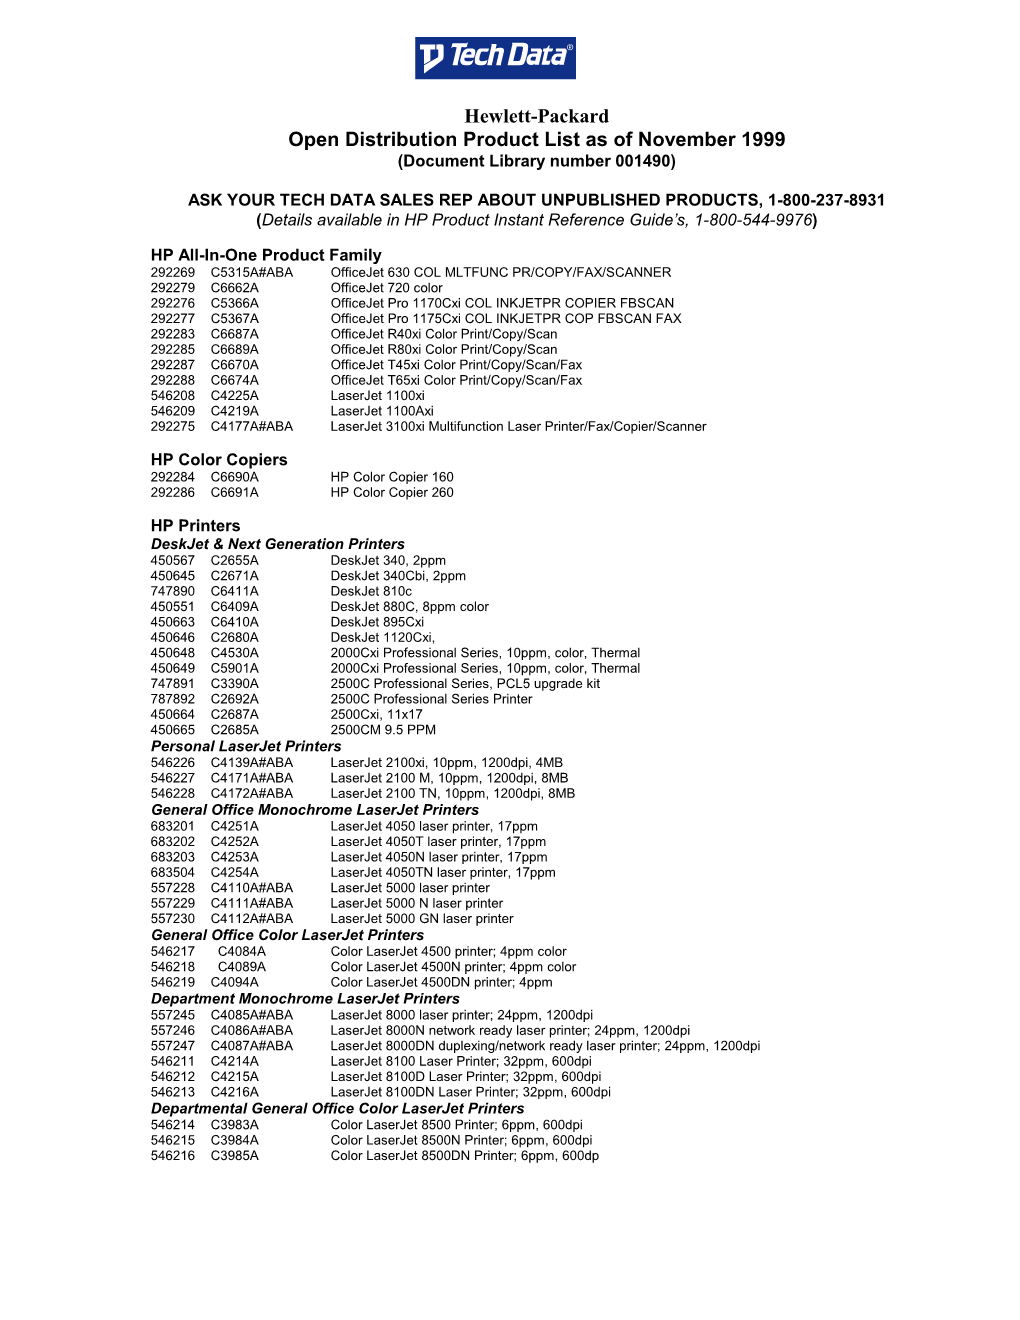 Hewlett-Packard Open Distribution Product List As of April 1998